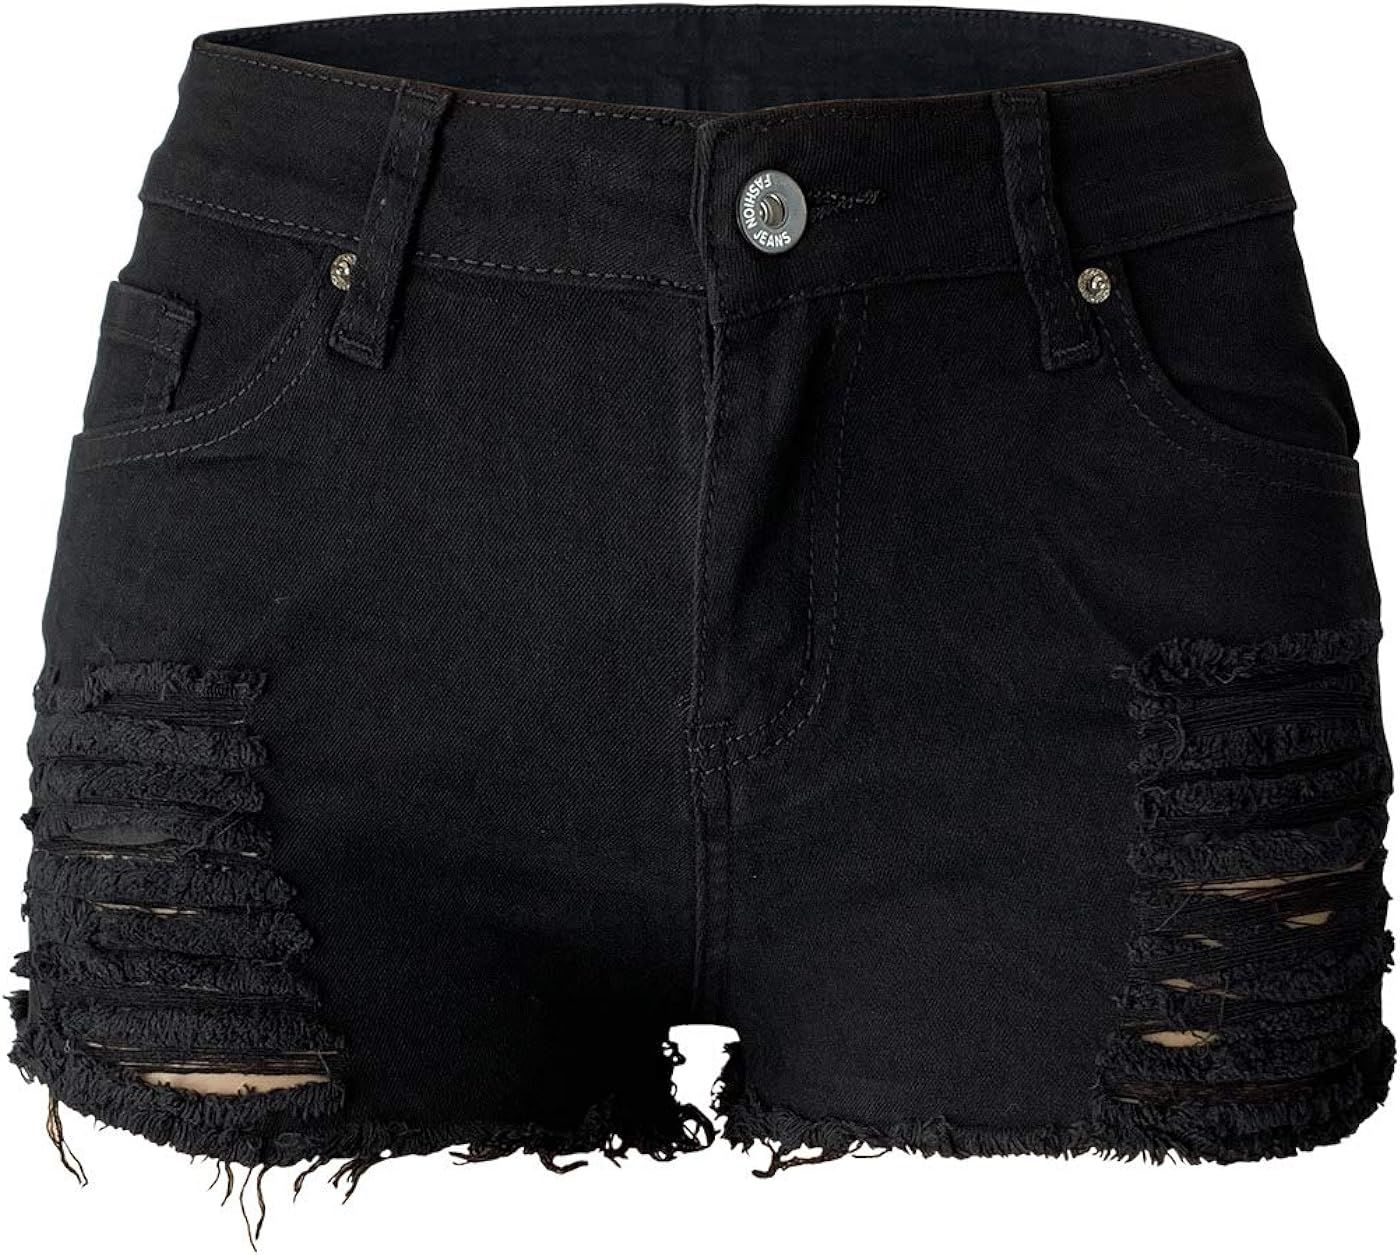 Aodrusa Womens Ripped Denim Shorts Mid Rise Body Enhancing Curvy Cutoff Distressed Jeans | Amazon (US)